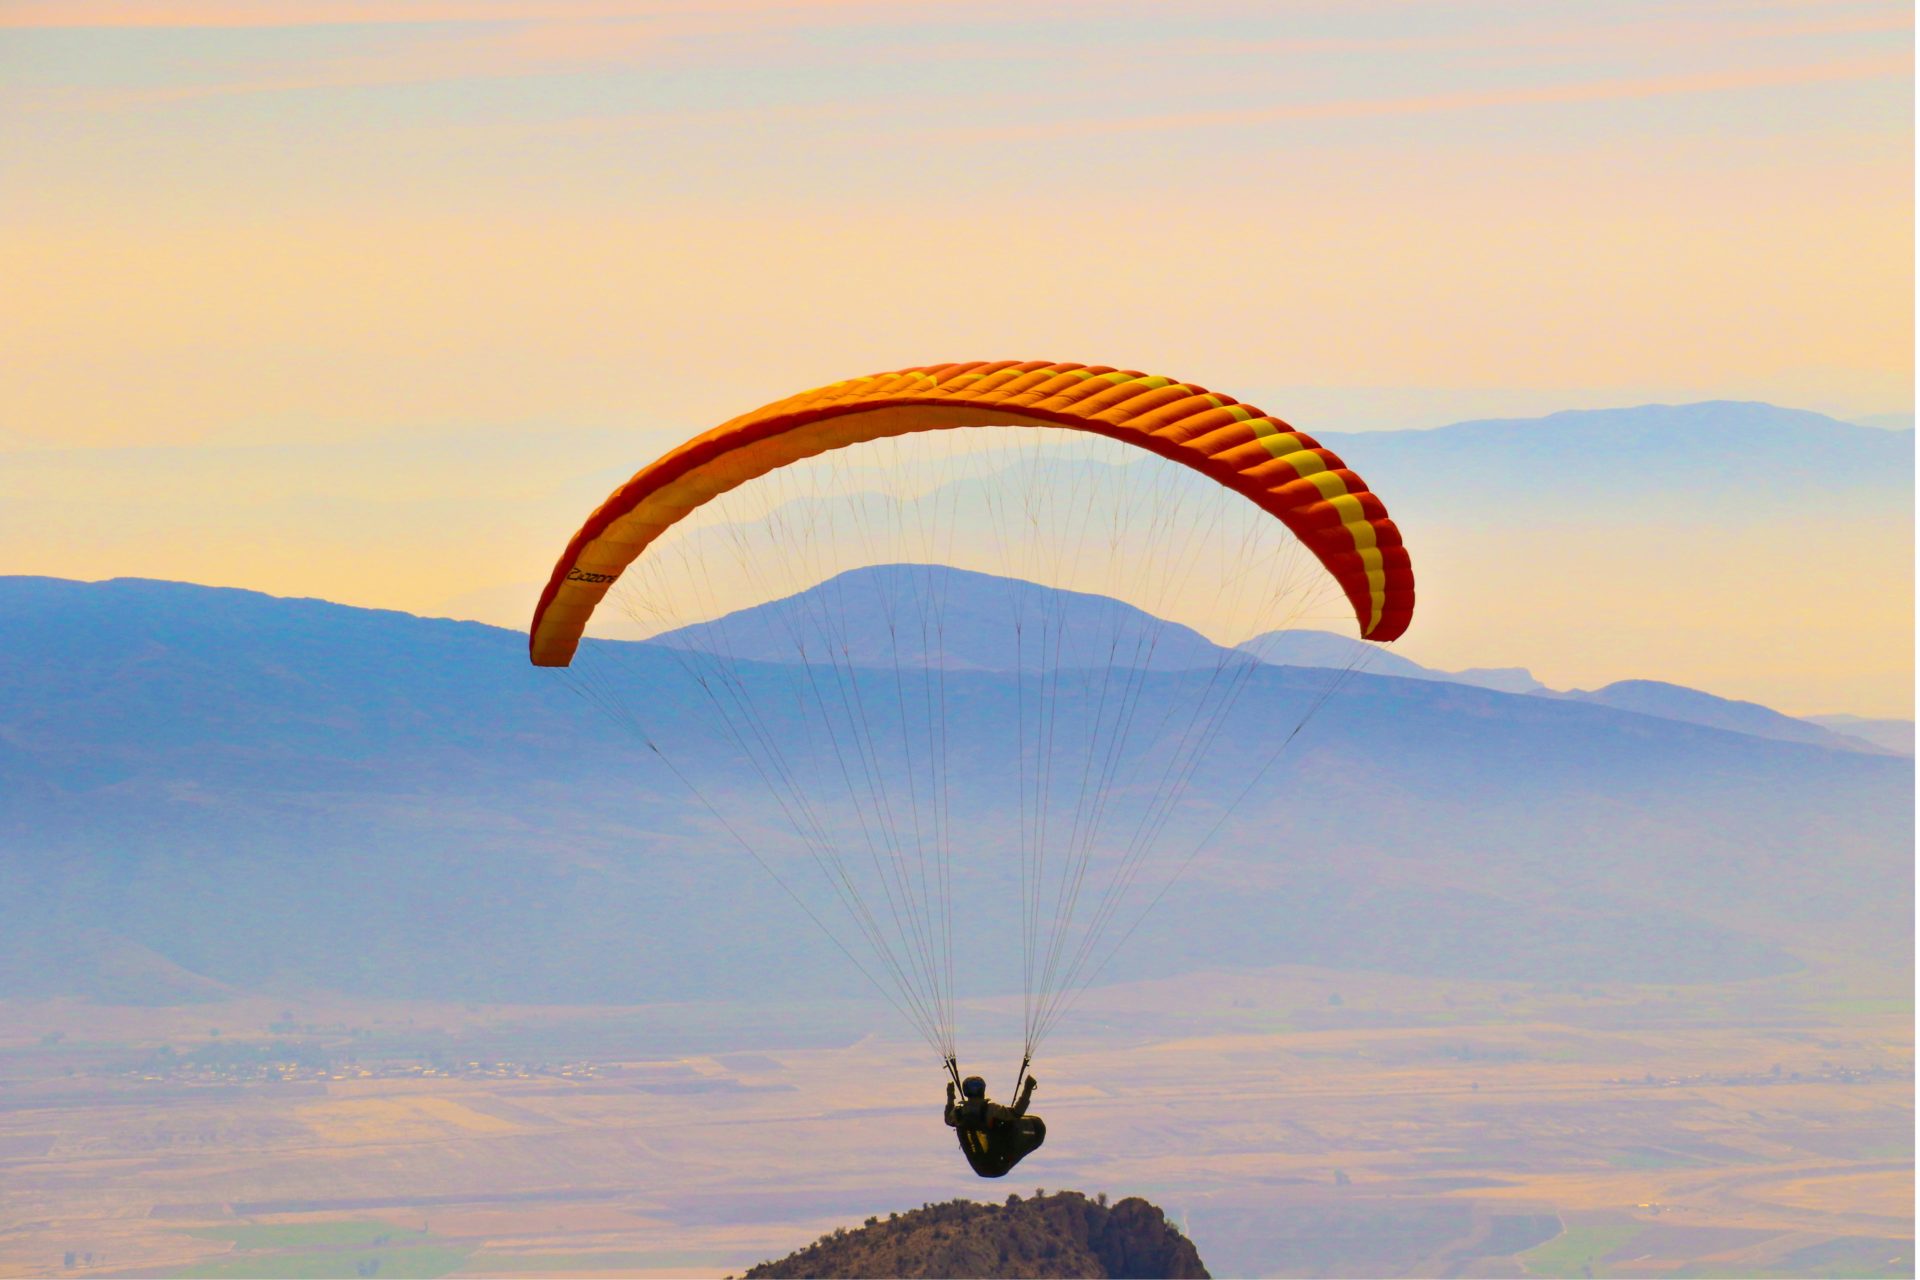 person riding parachute